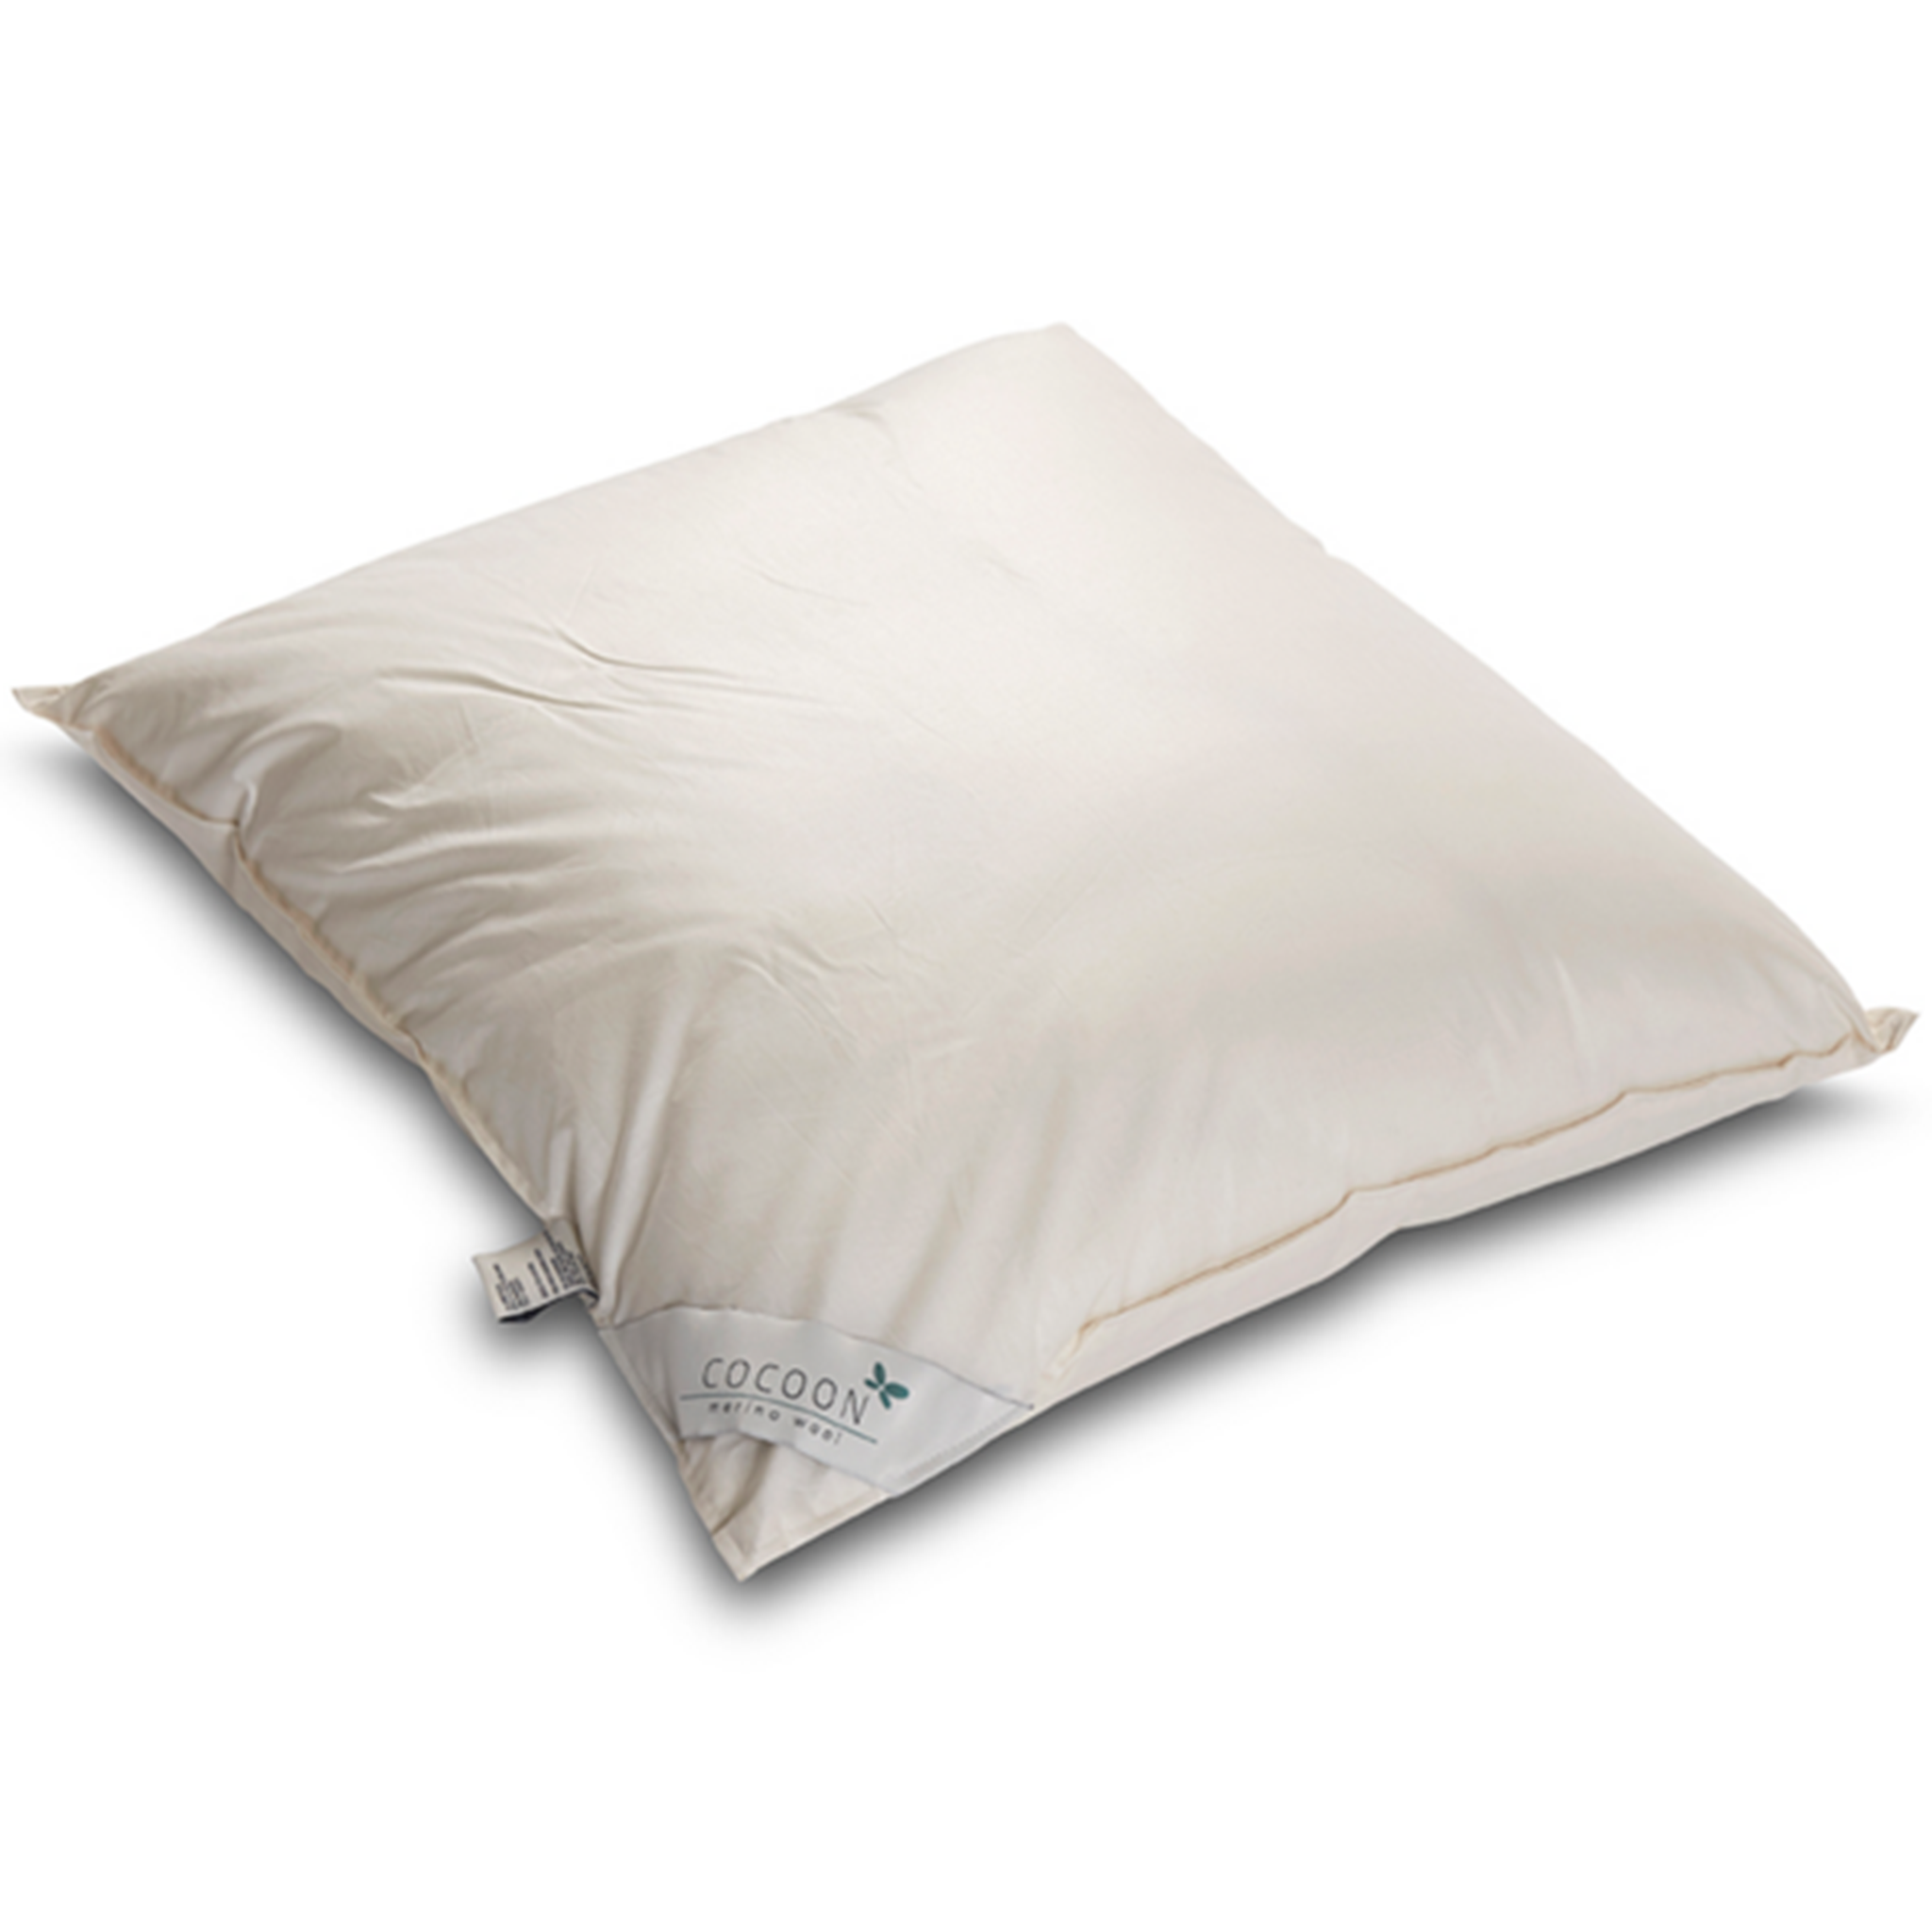 Cocoon Merino Wool Adult Pillow